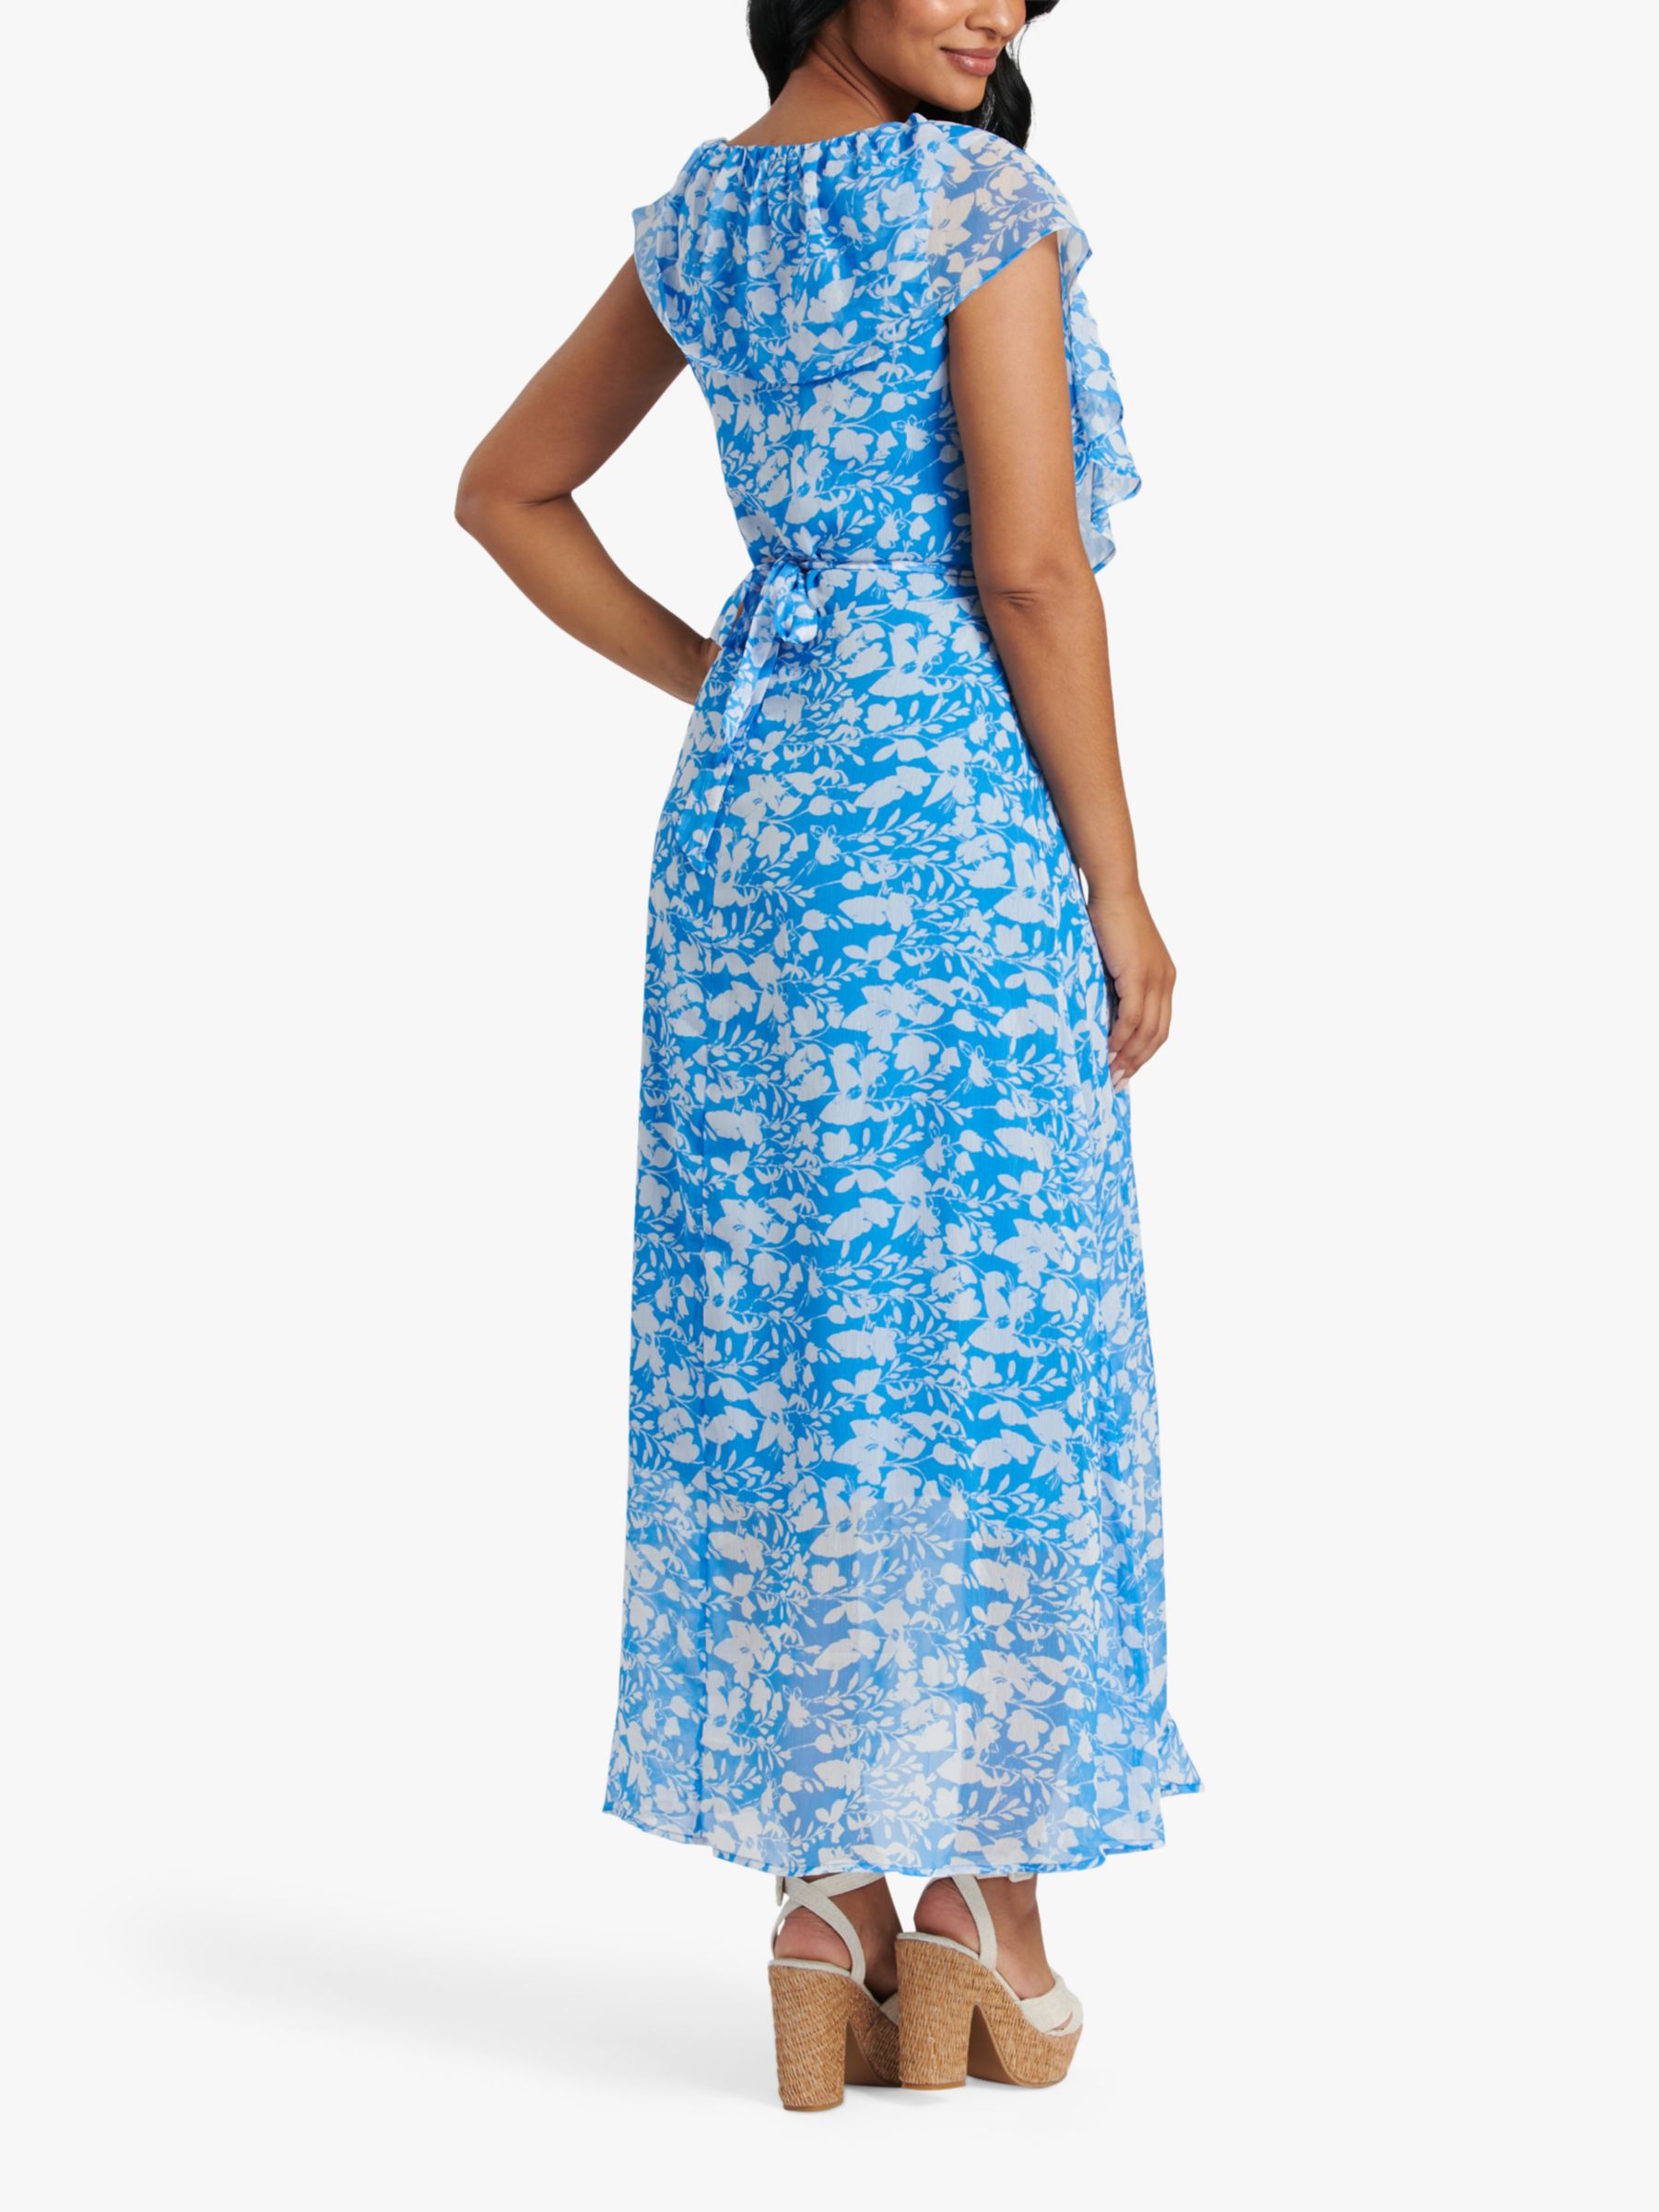 South Beach Chiffon Print Frill Neck Midi Dress, Blue/White, 8